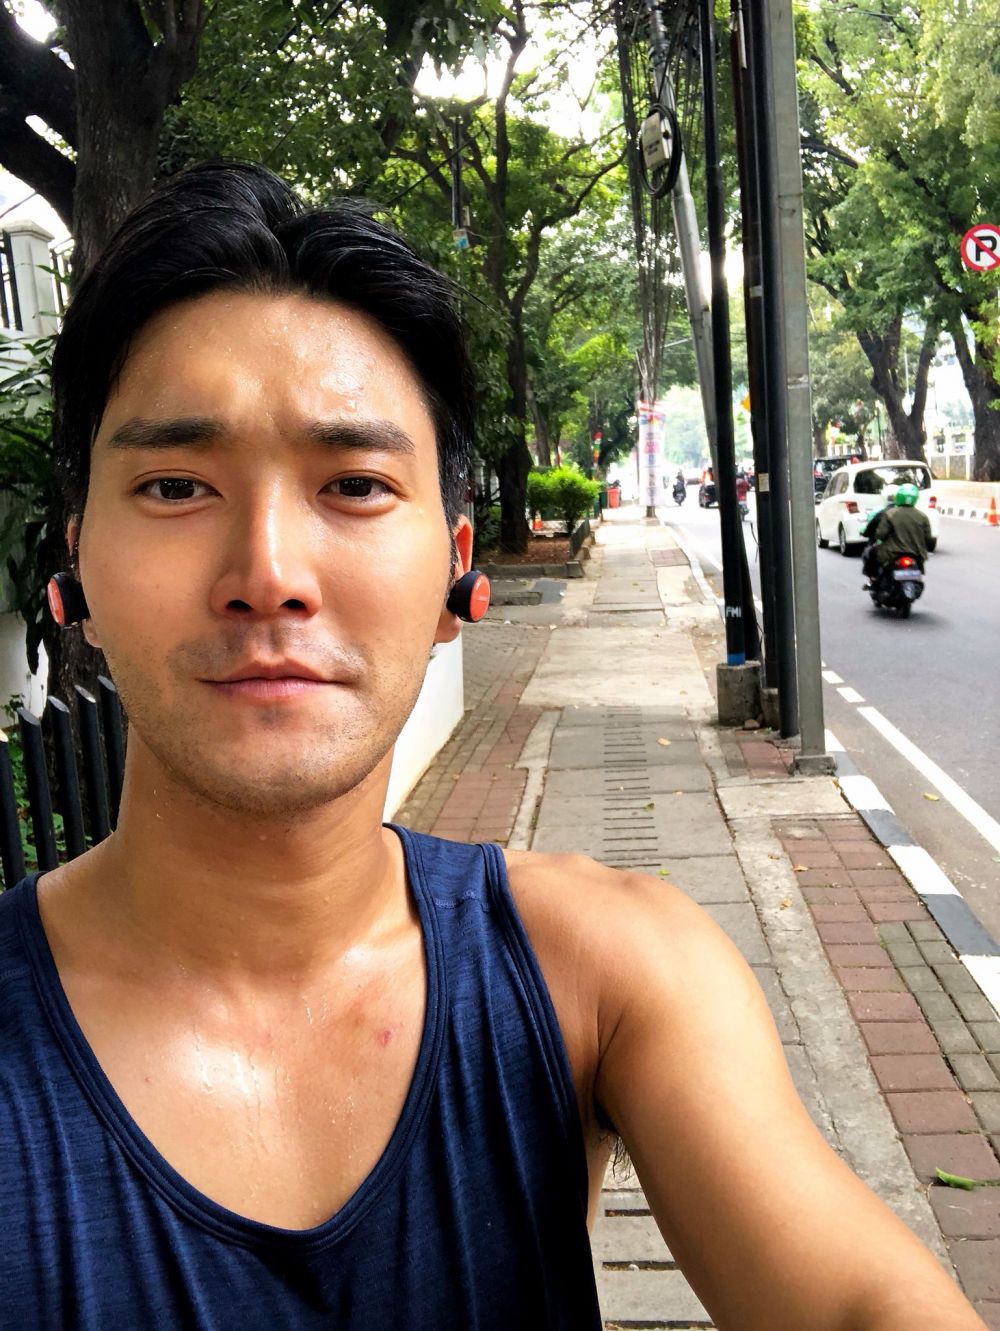 Jogging sendirian di Kota Jakarta, Siwon Super Junior bikin fans heboh